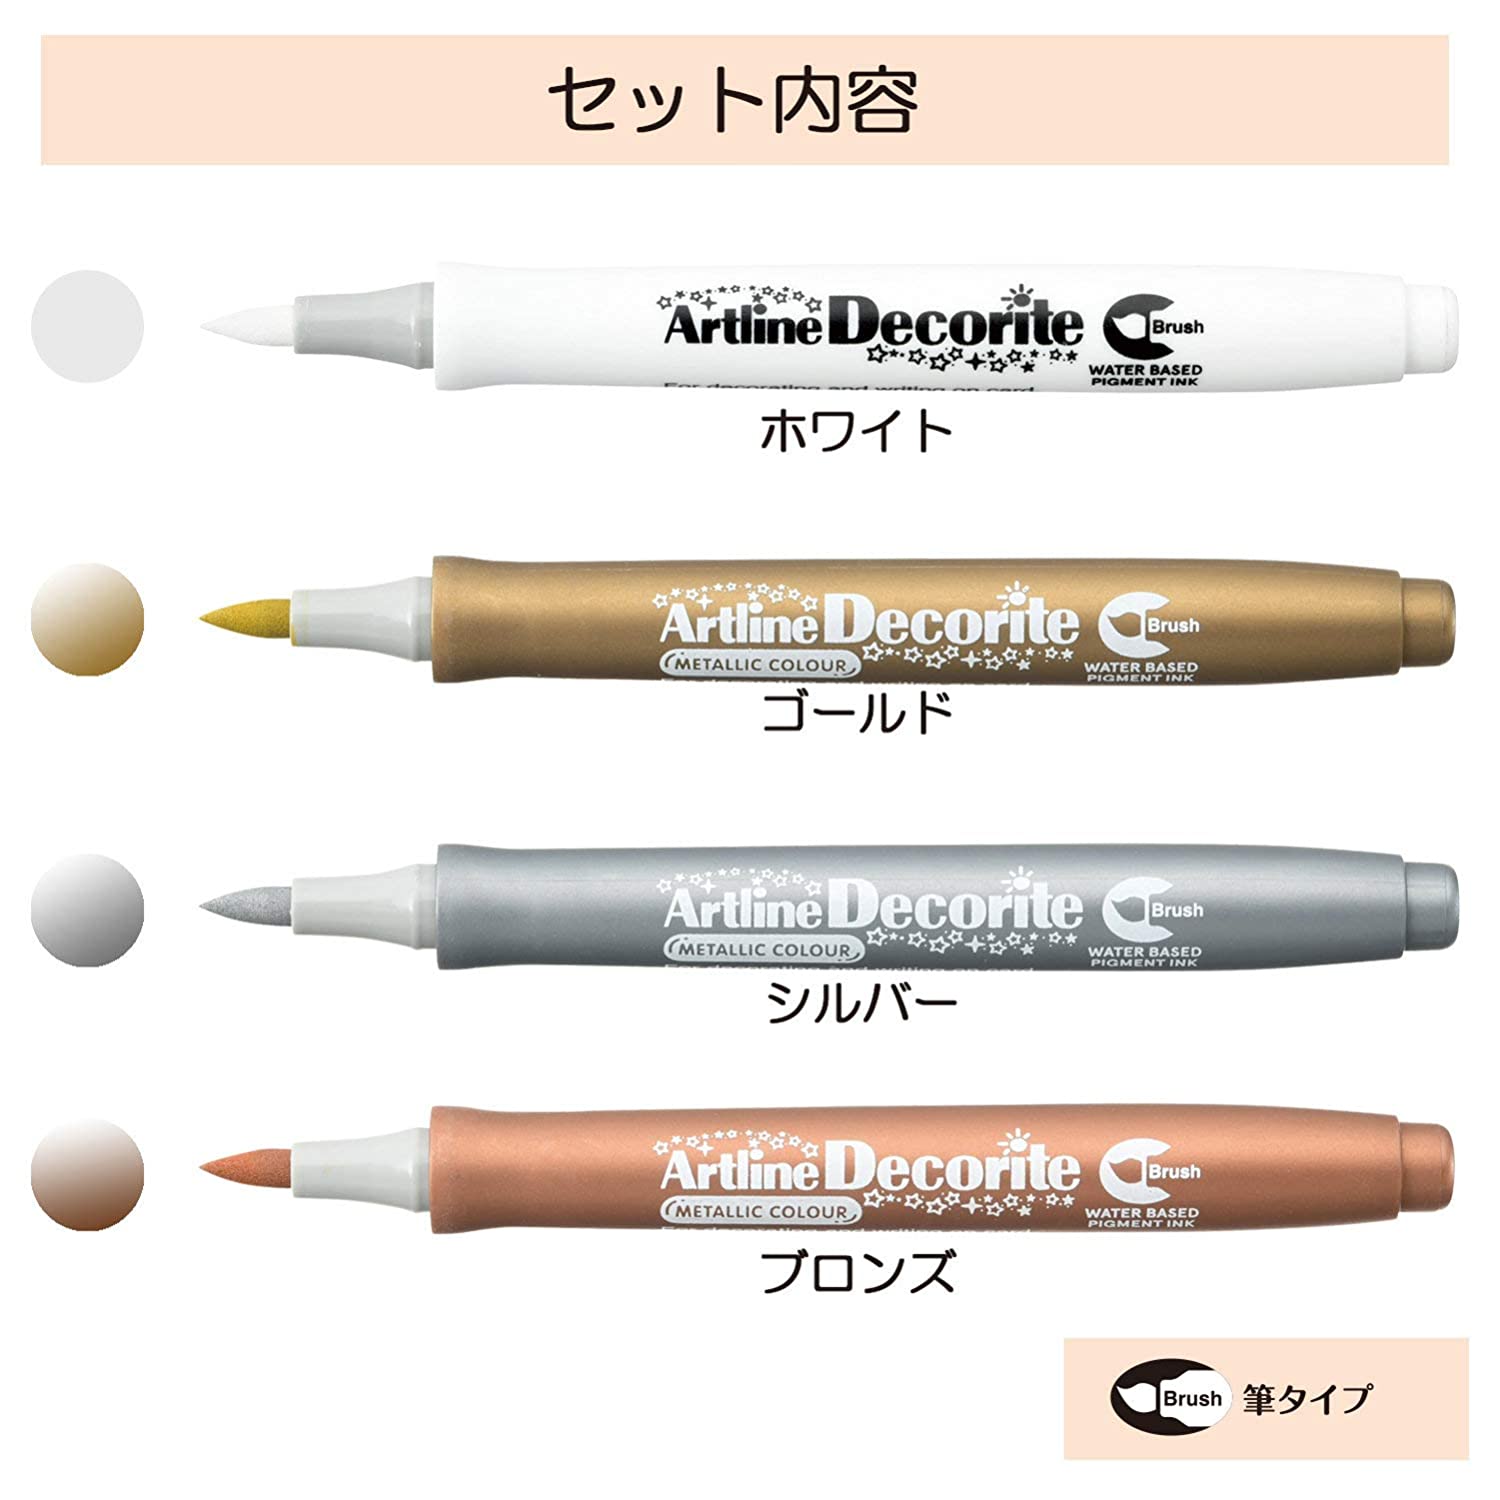 Artline Decorite Brush Marker (METALLIC COLOUR) 4 PCS